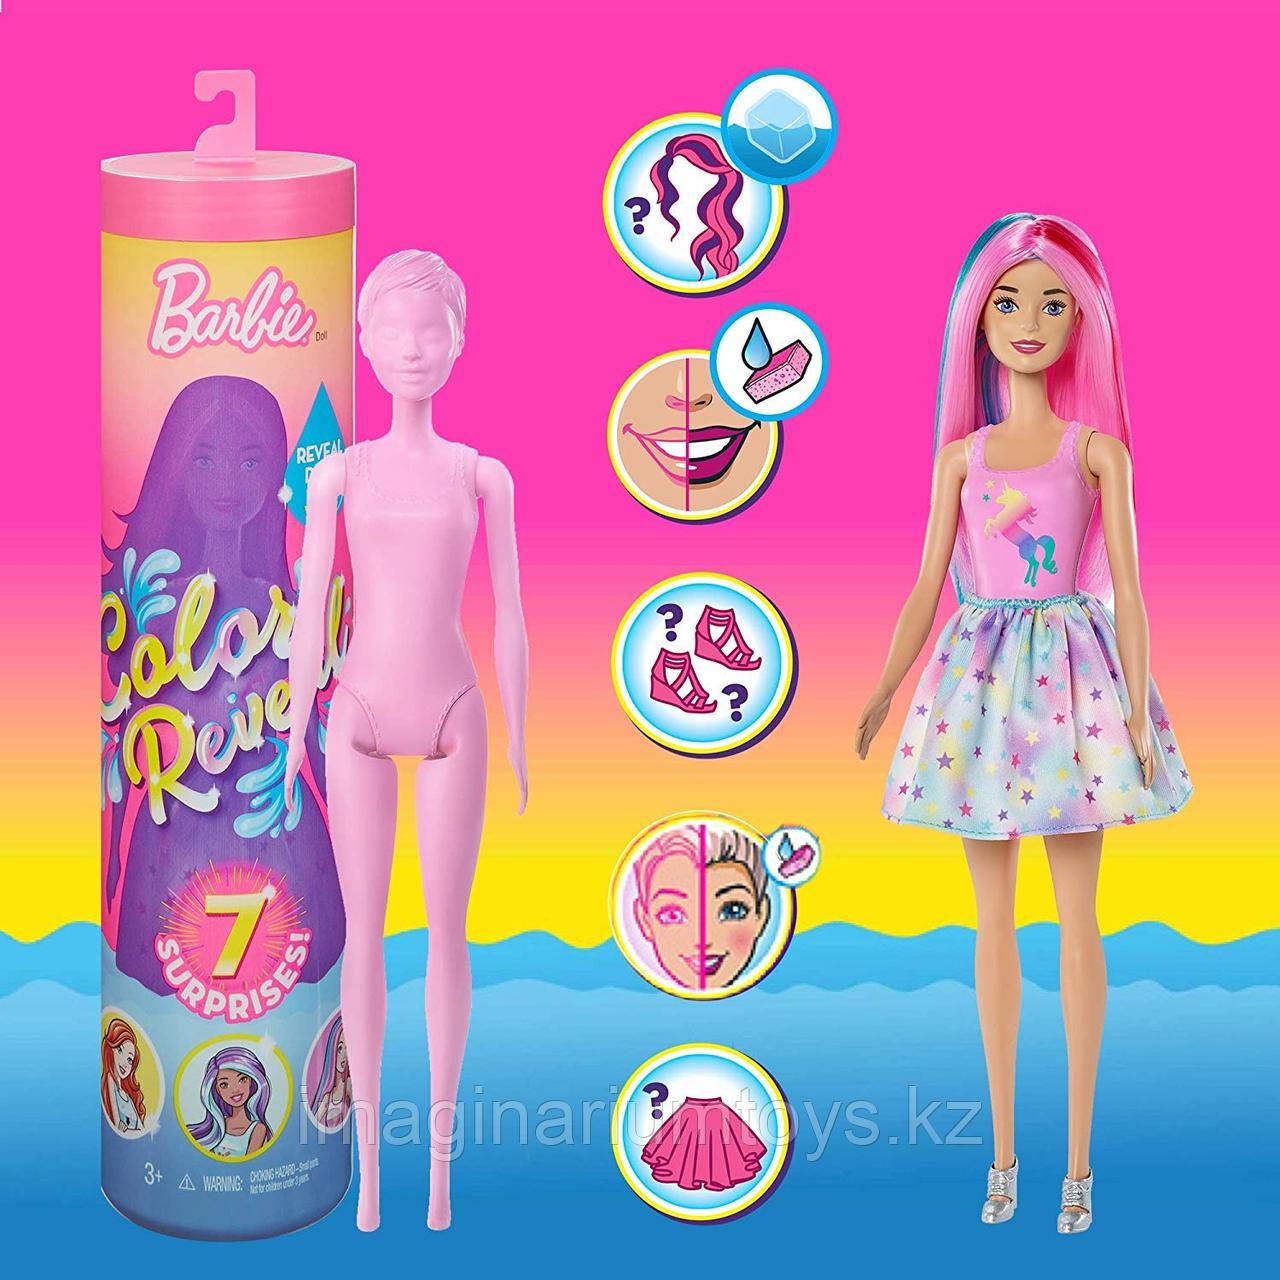 Кукла Барби меняющая цвет в воде Barbie Color Reveal, фото 1